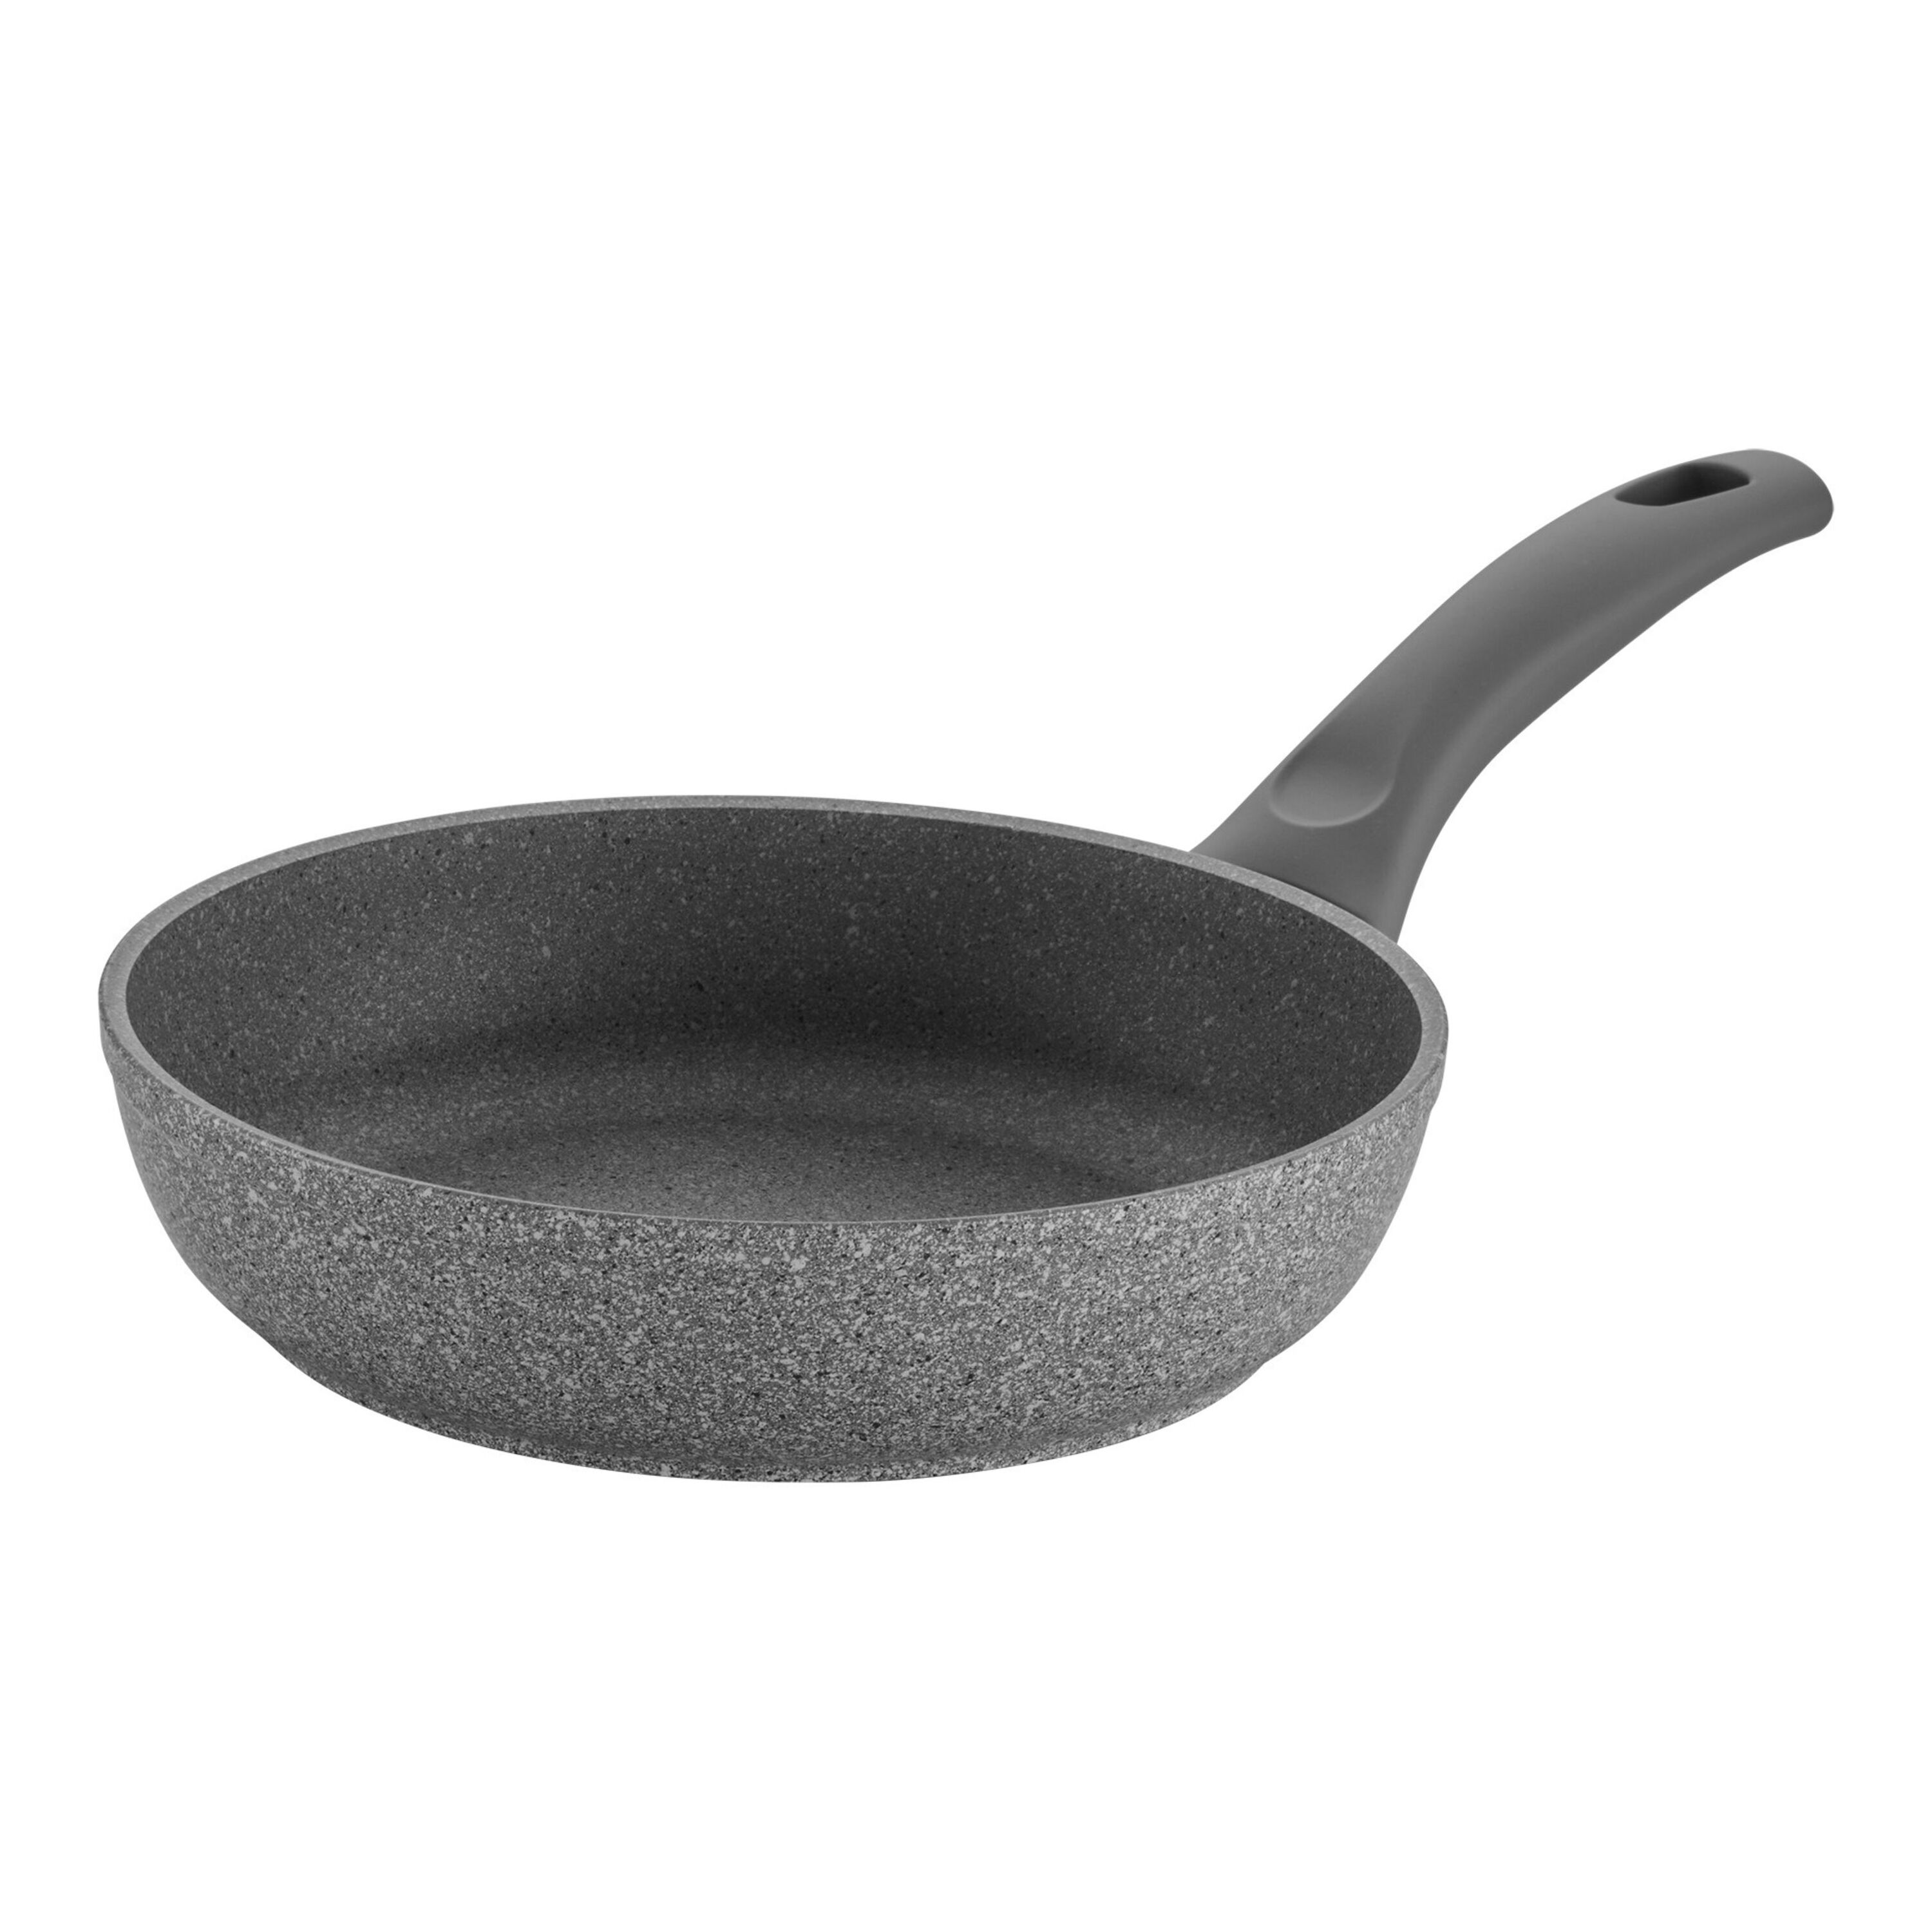  BALLARINI Palermo Frying Pan, 32 cm, Stainless Steel, Grey:  Home & Kitchen